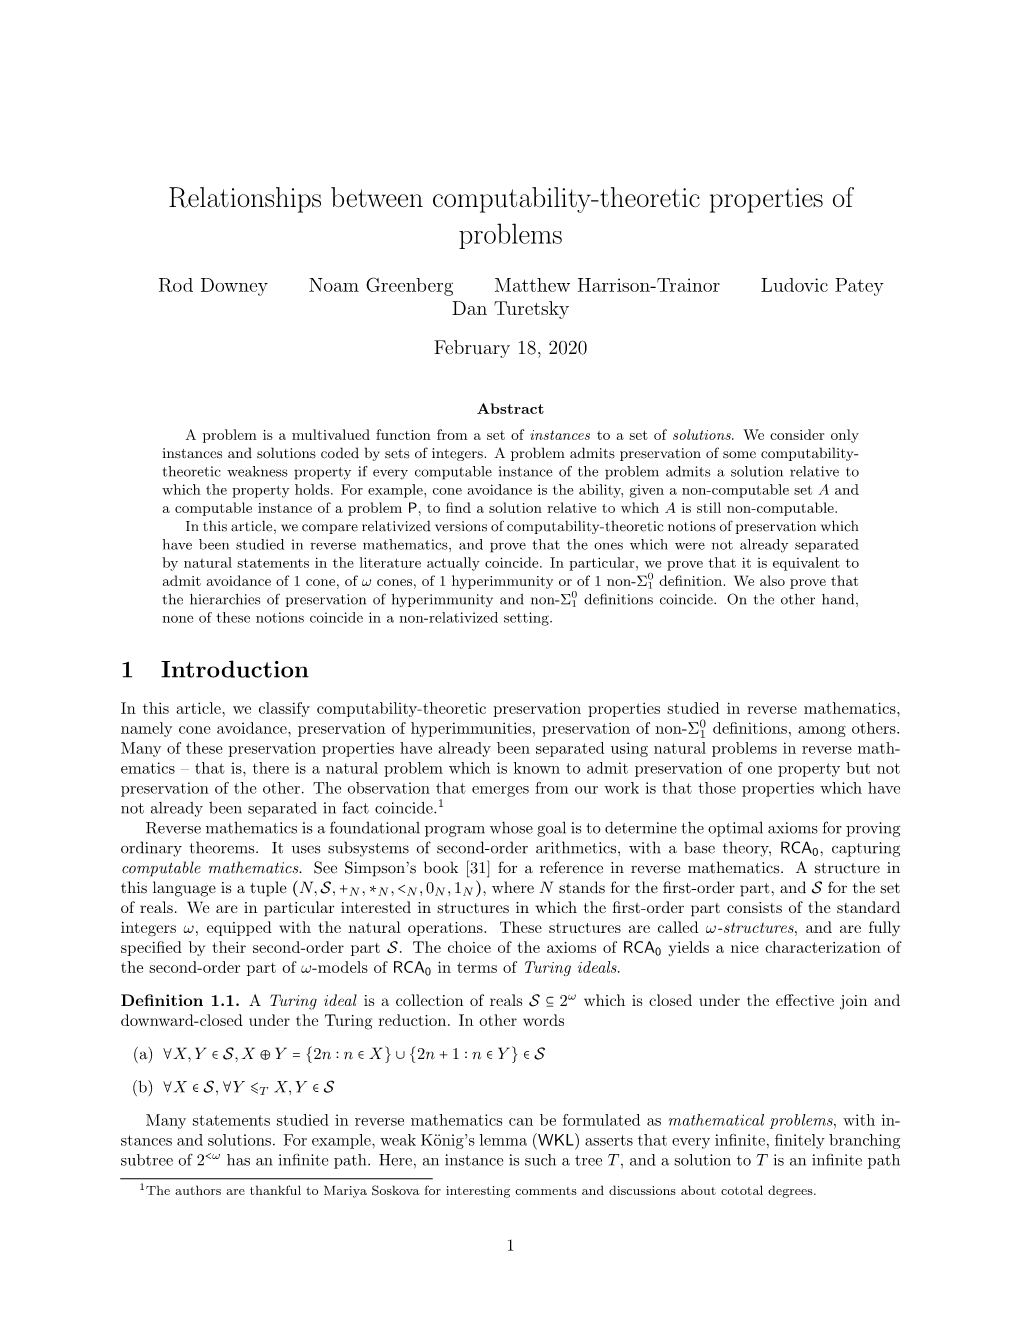 Relationships Between Computability-Theoretic Properties of Problems